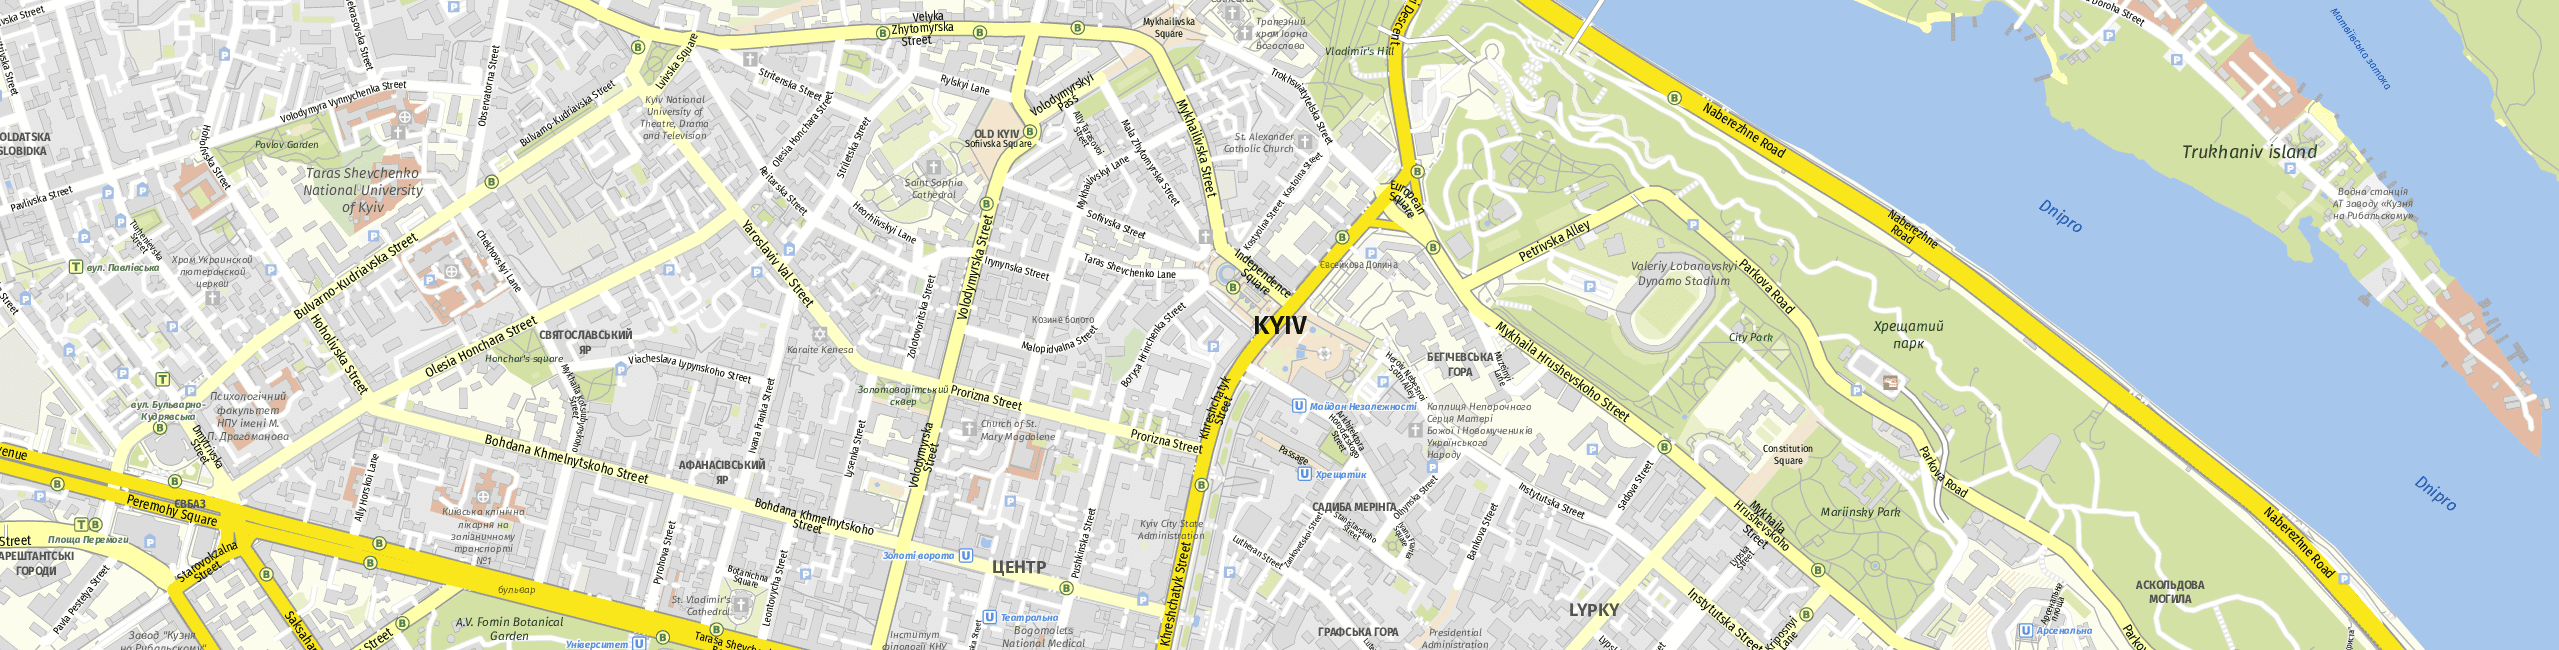 Stadtplan Kyiv zum Downloaden.